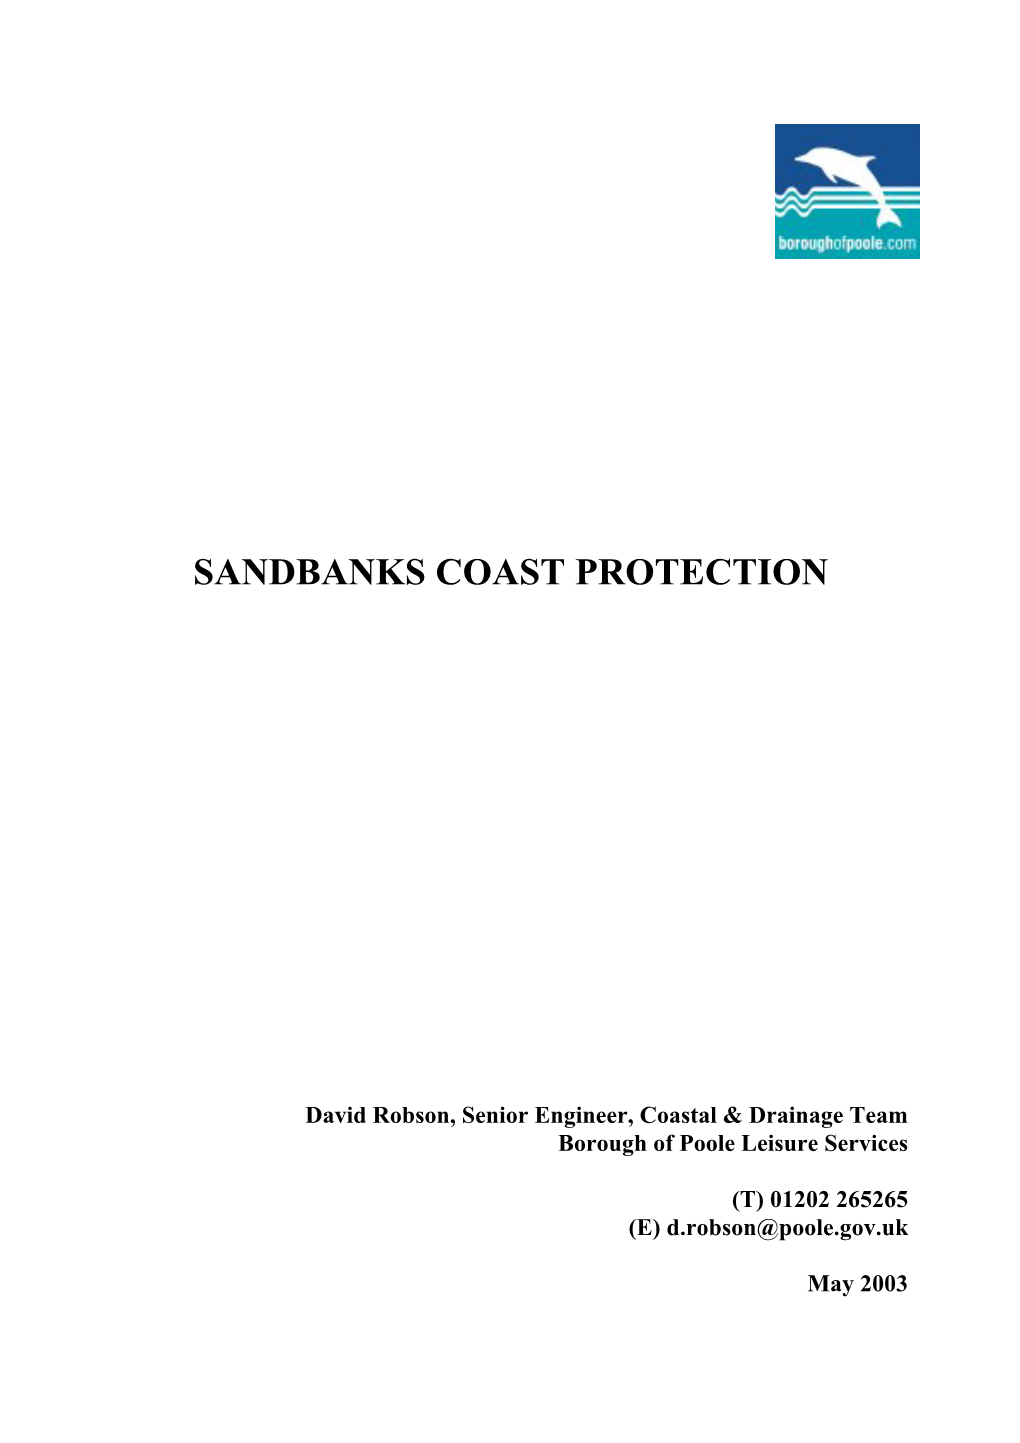 Report on Sandbanks Works 2003